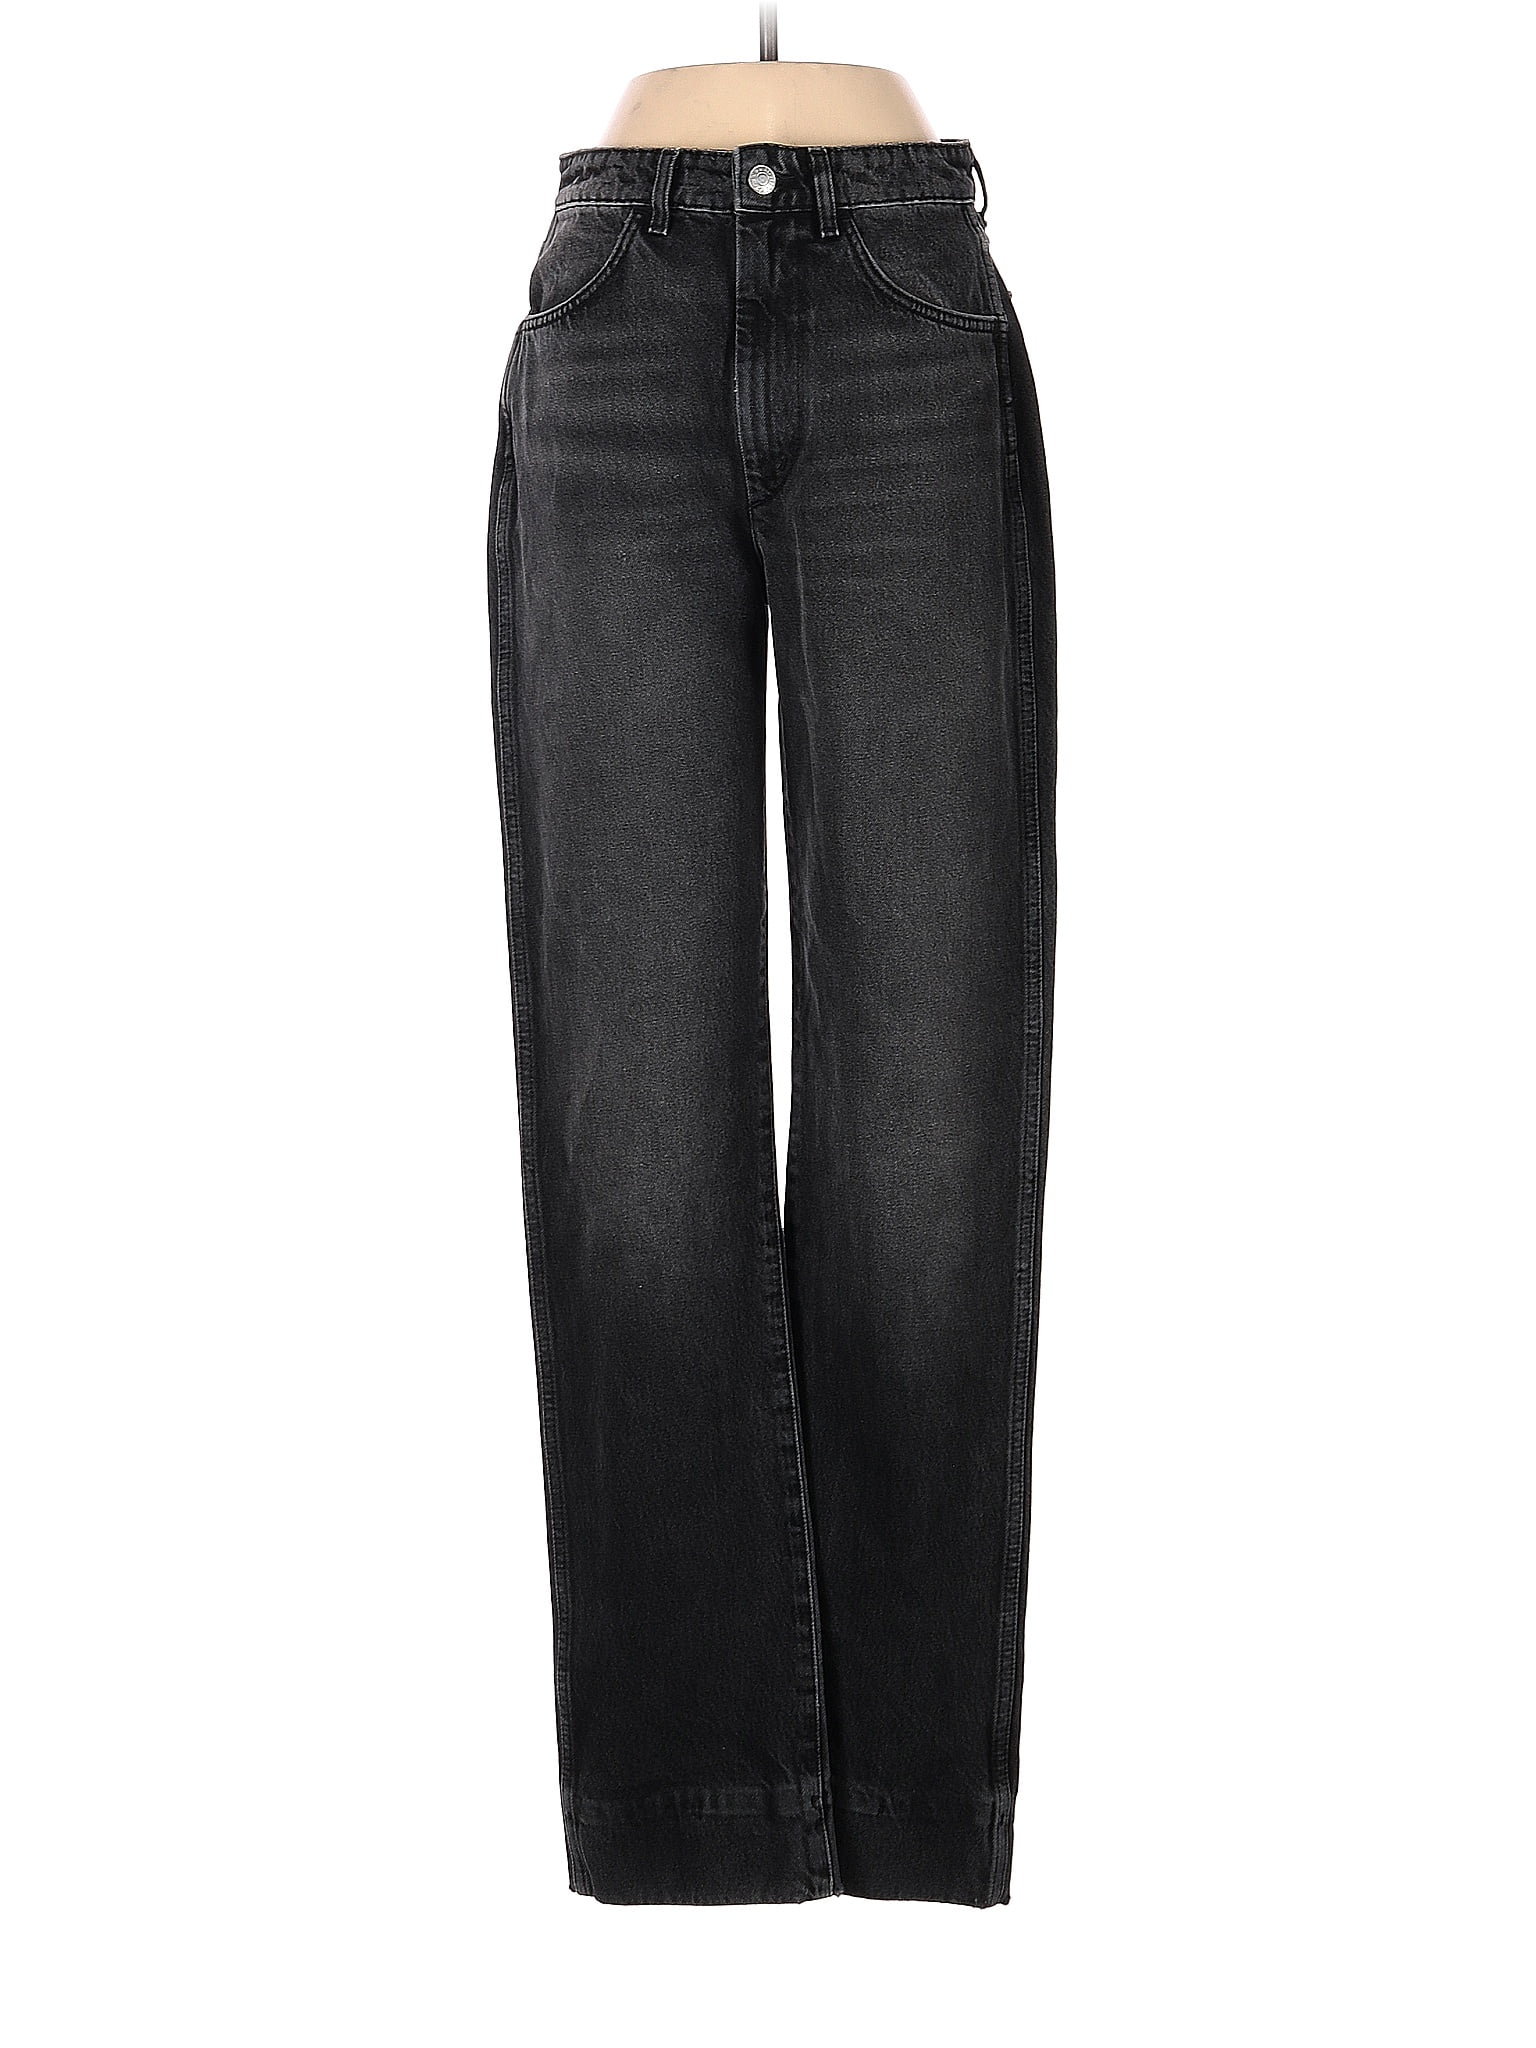 RE/DONE Solid Black Jeans 26 Waist - 68% off | thredUP